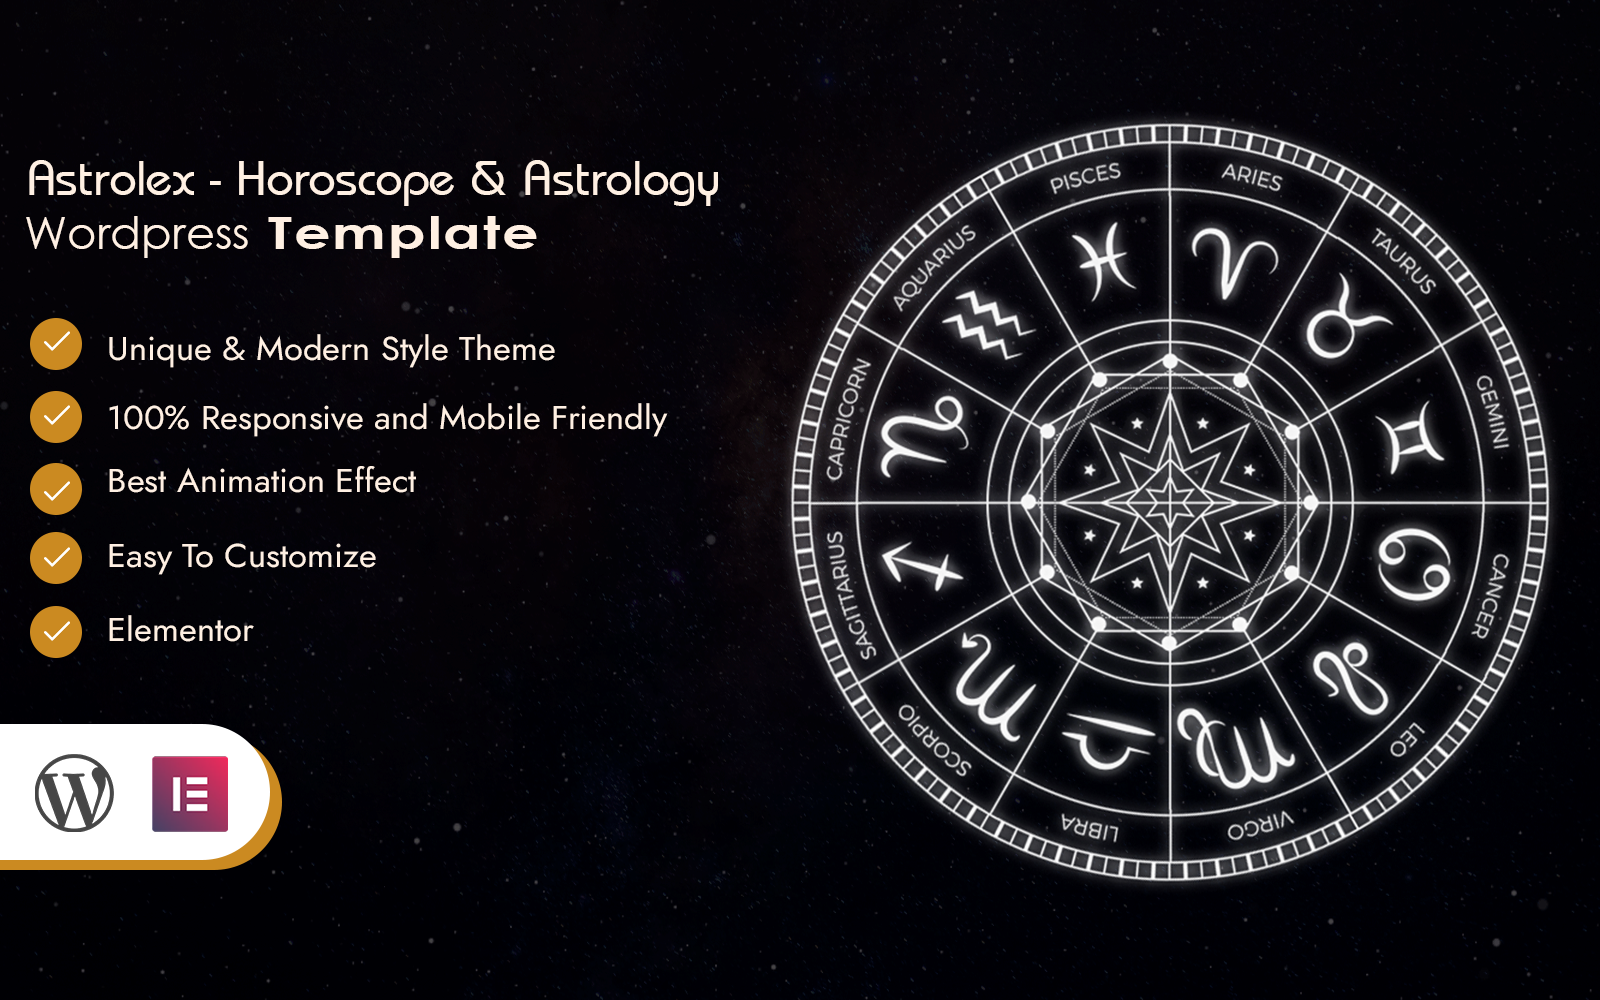 Astrolex - Horoscope & Astrology WordPress Theme